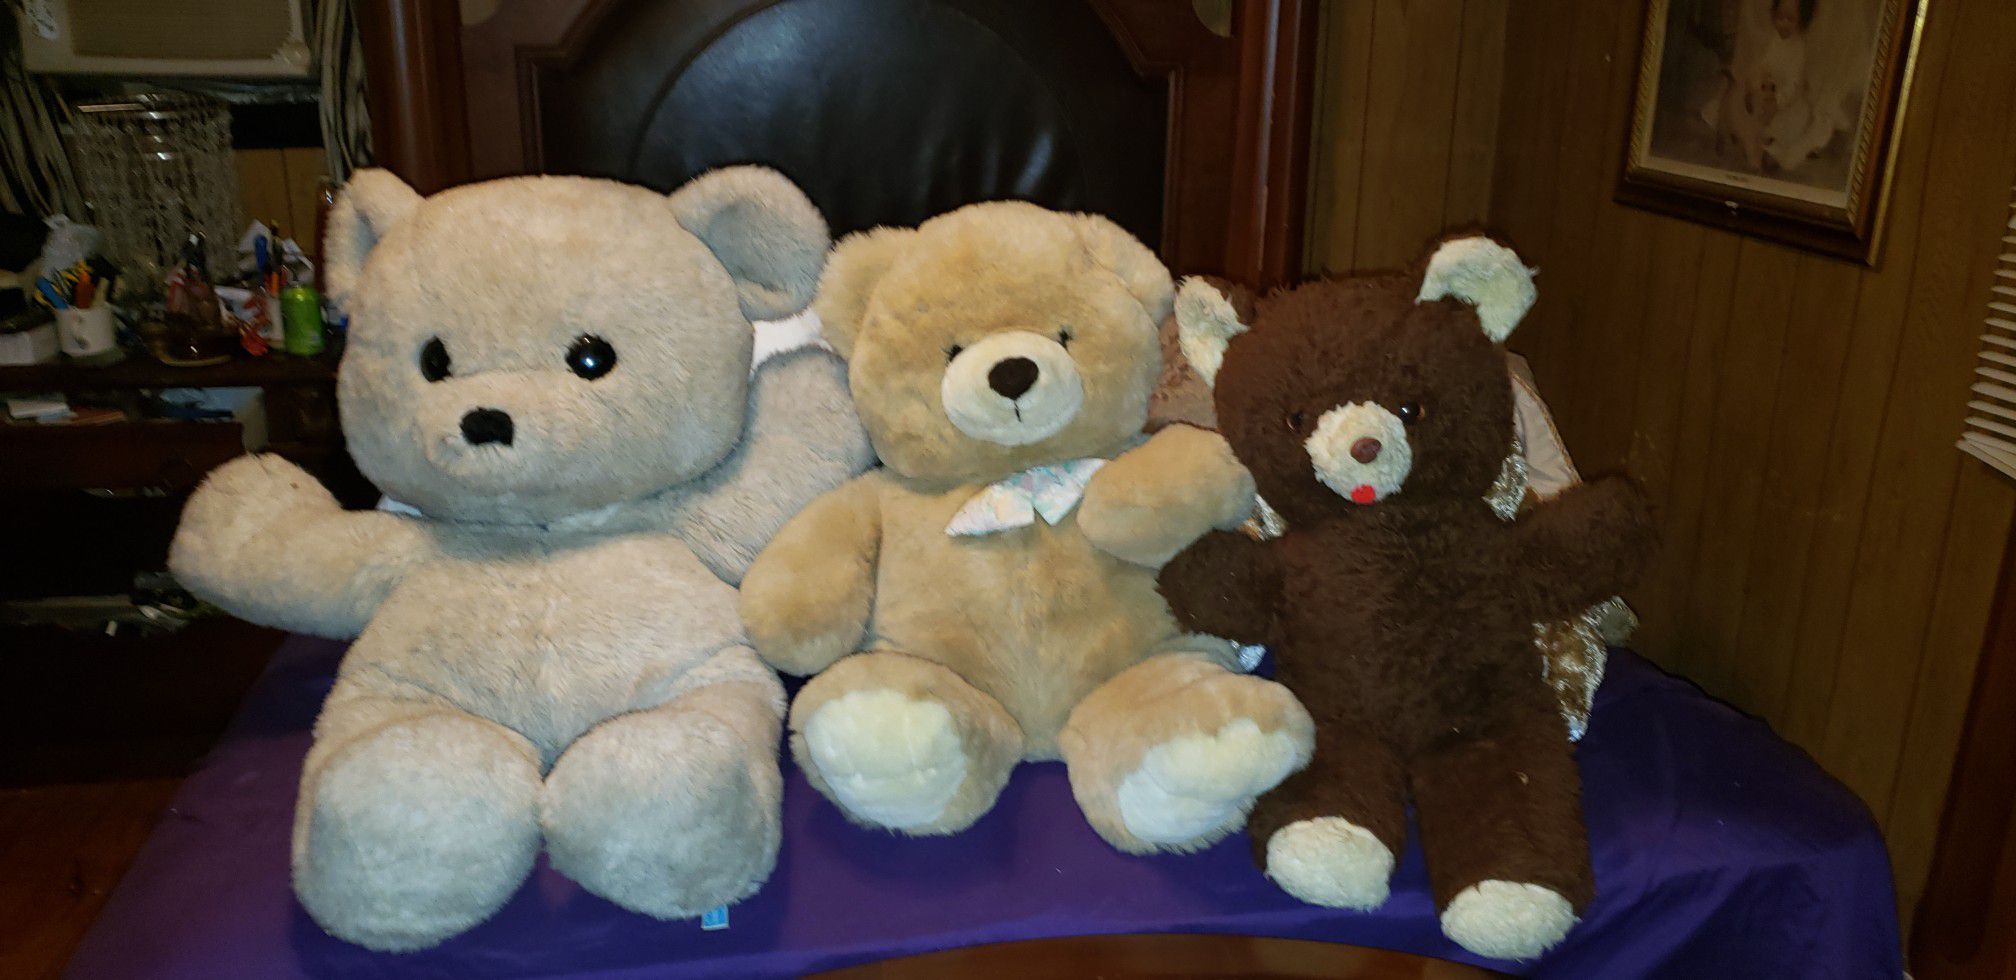 3 great big teddy bears